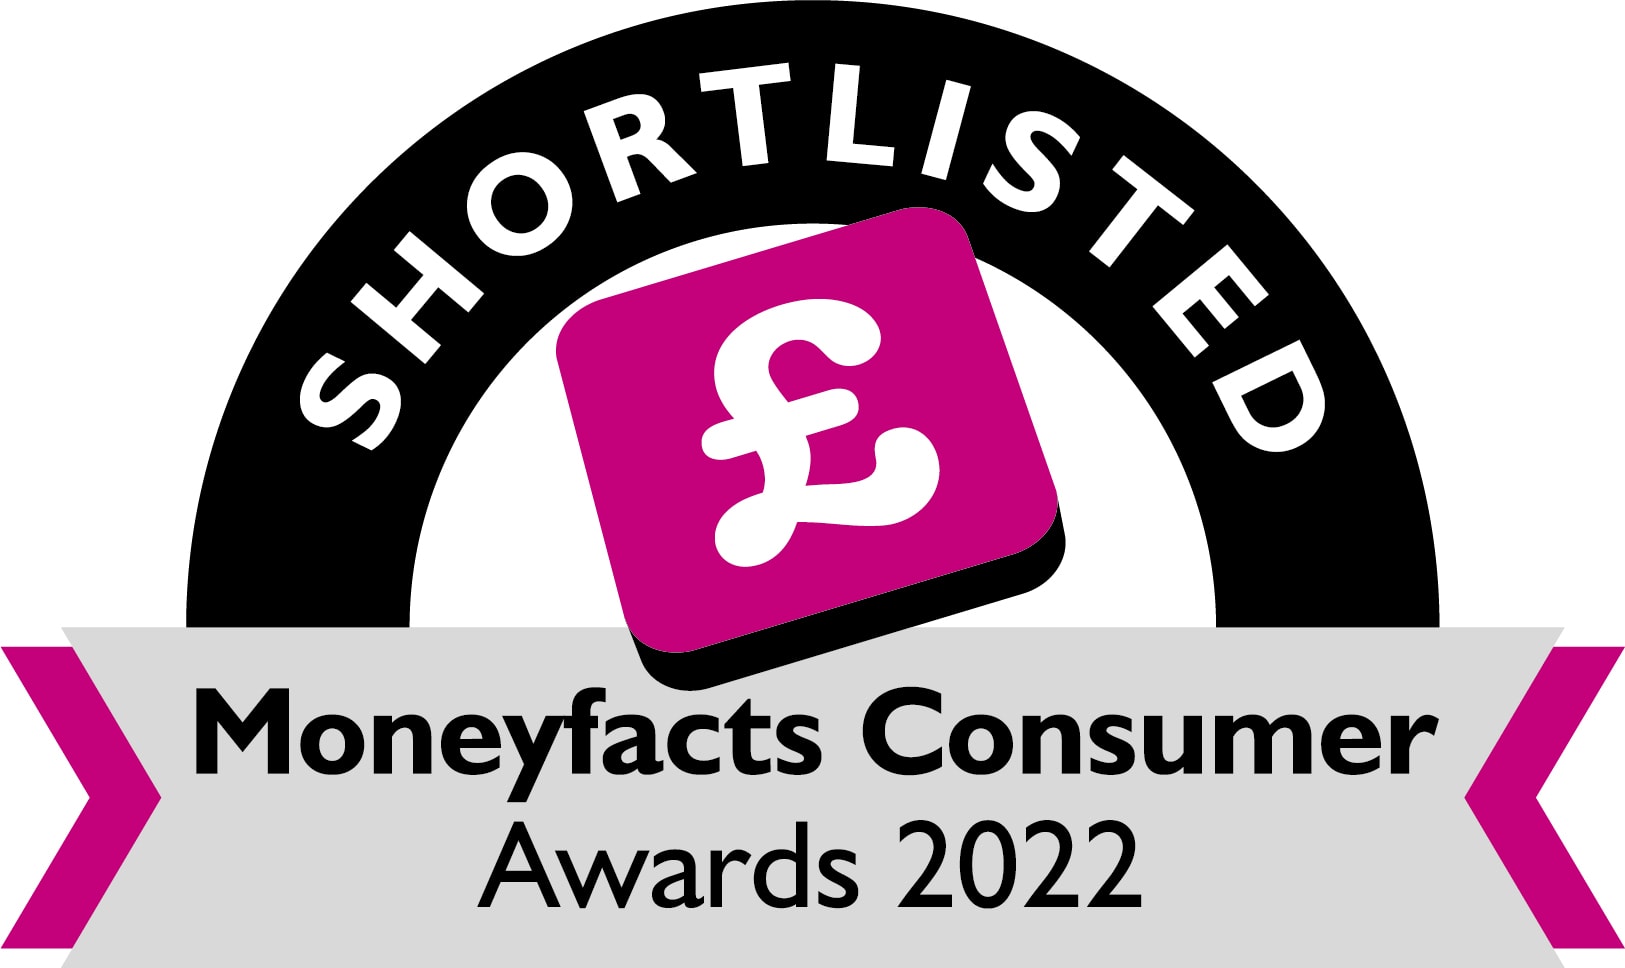 Moneyfacts Consumer Awards 2022